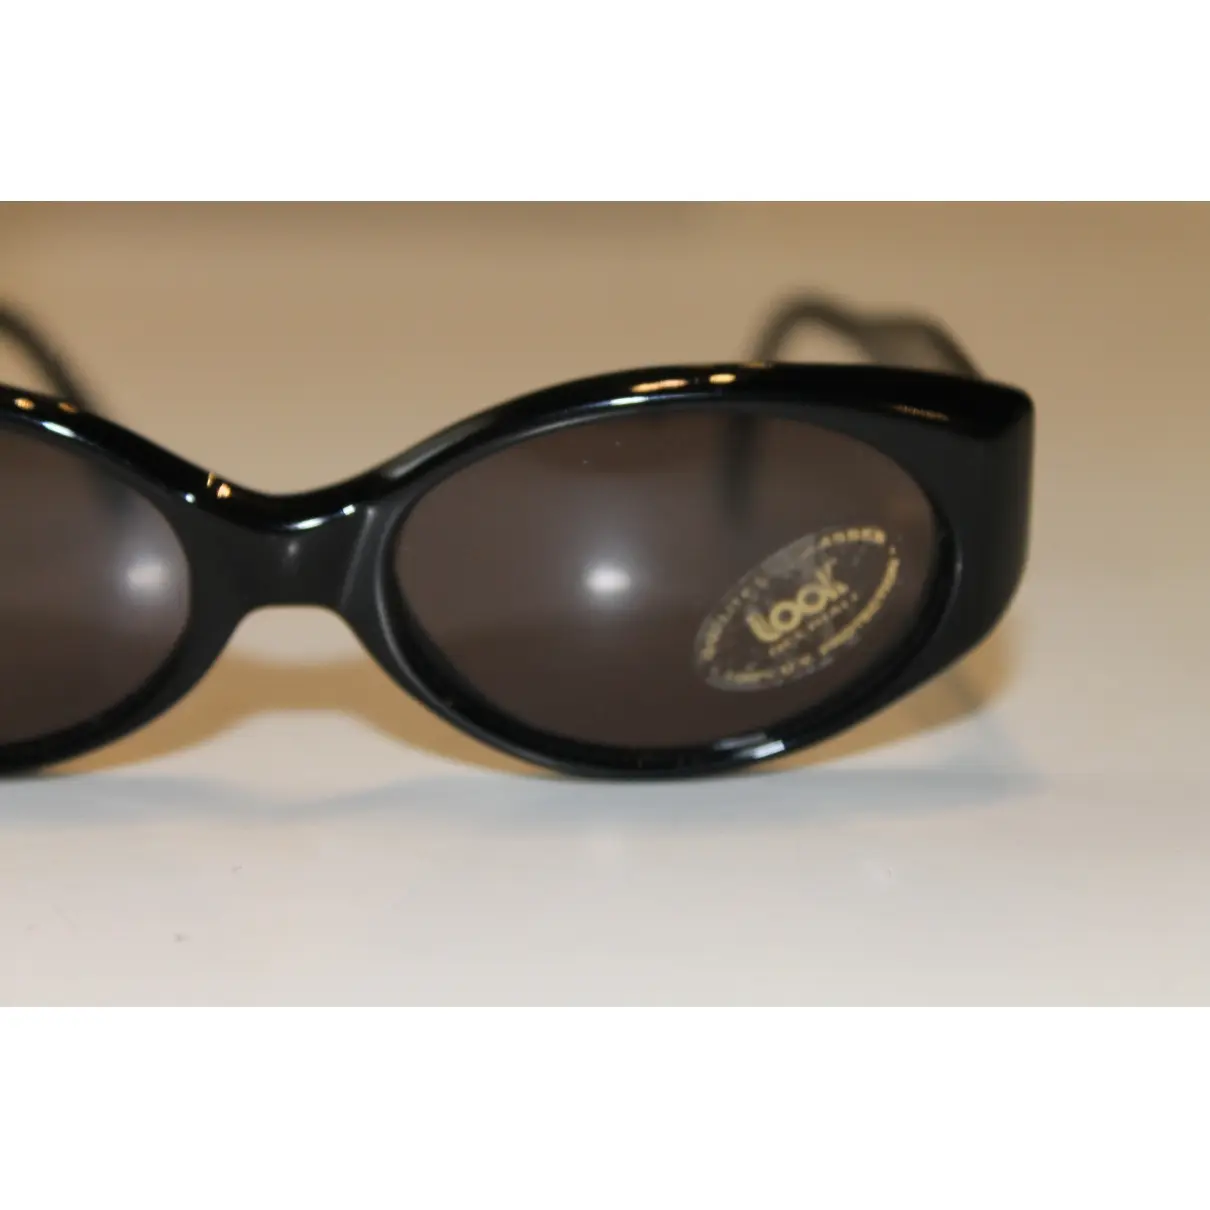 Look Sunglasses for sale - Vintage